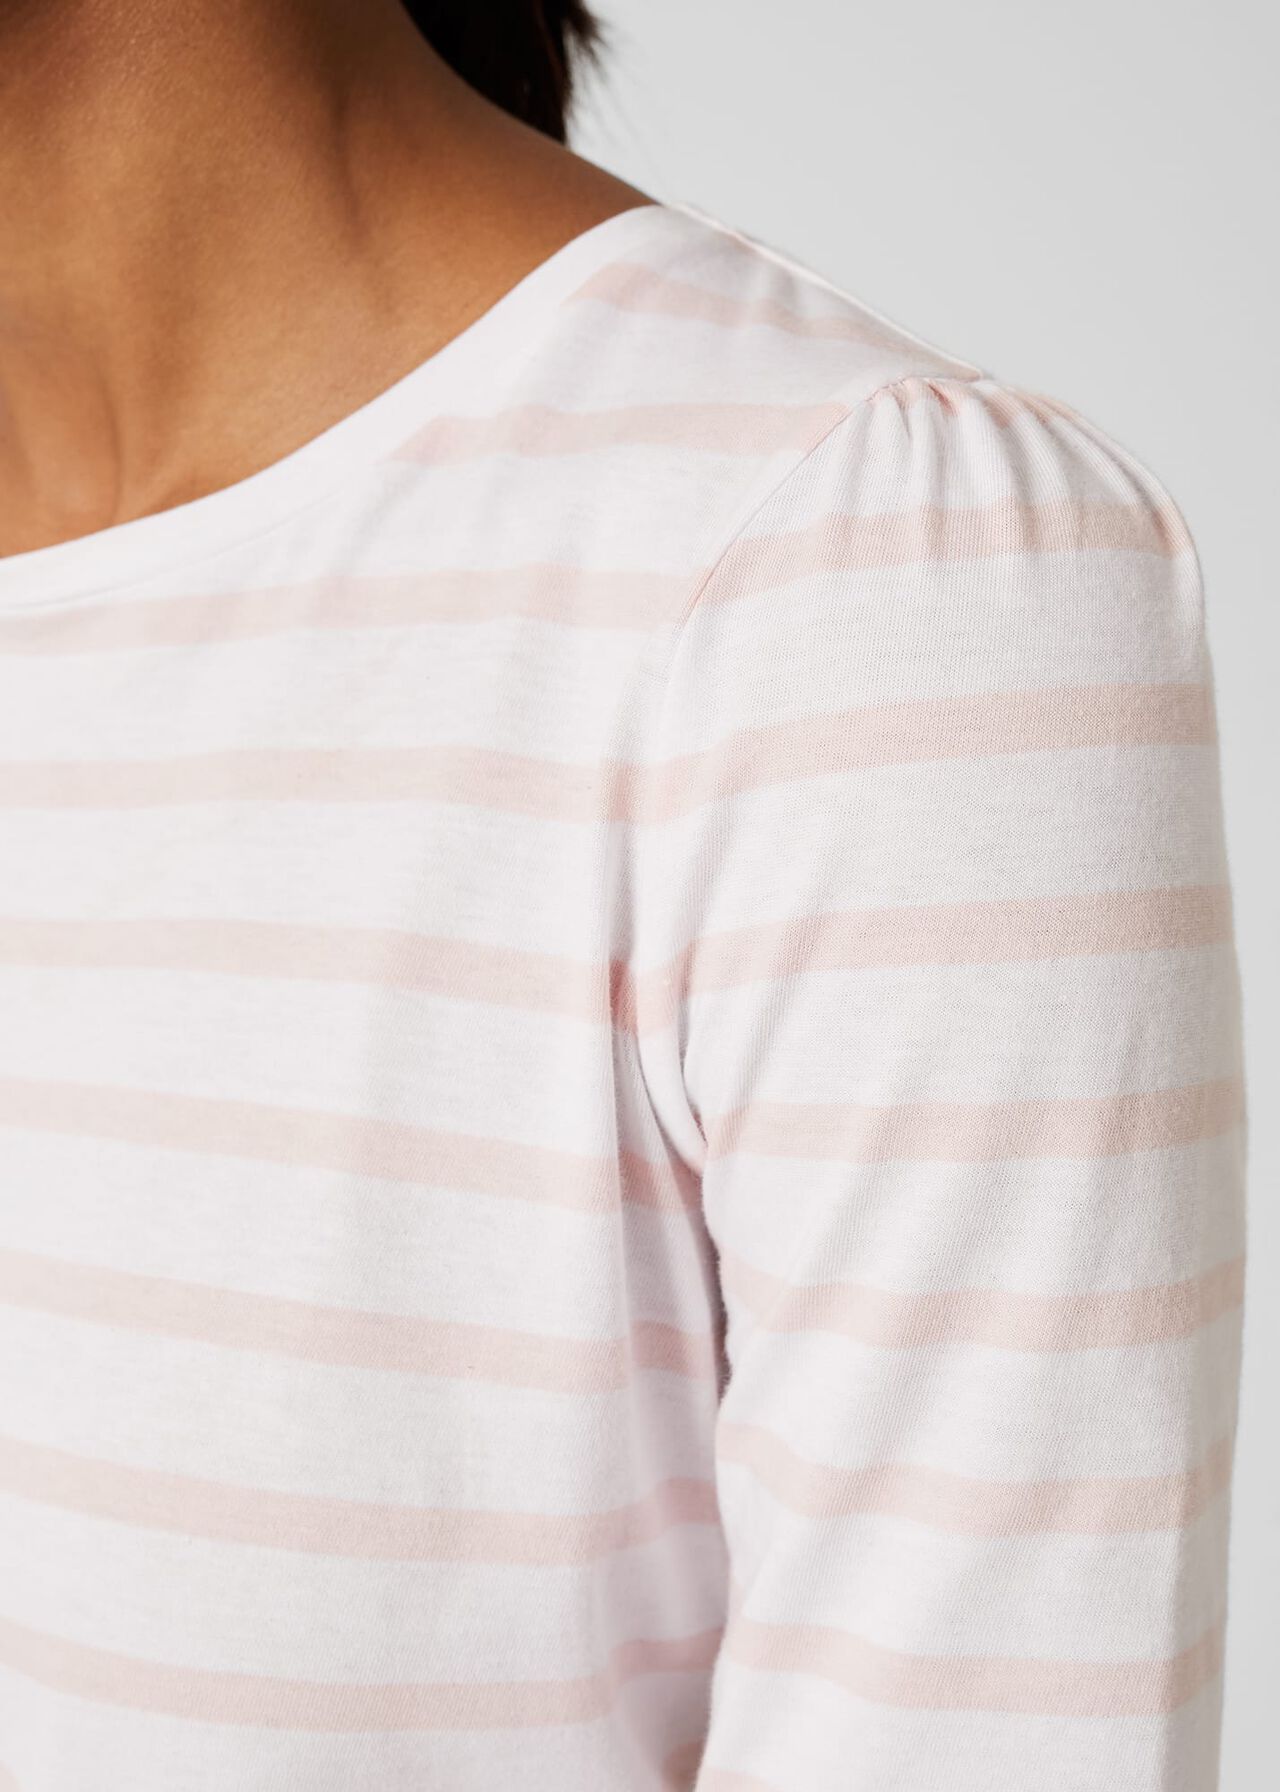 Eva Striped T-Shirt, White Pink, hi-res